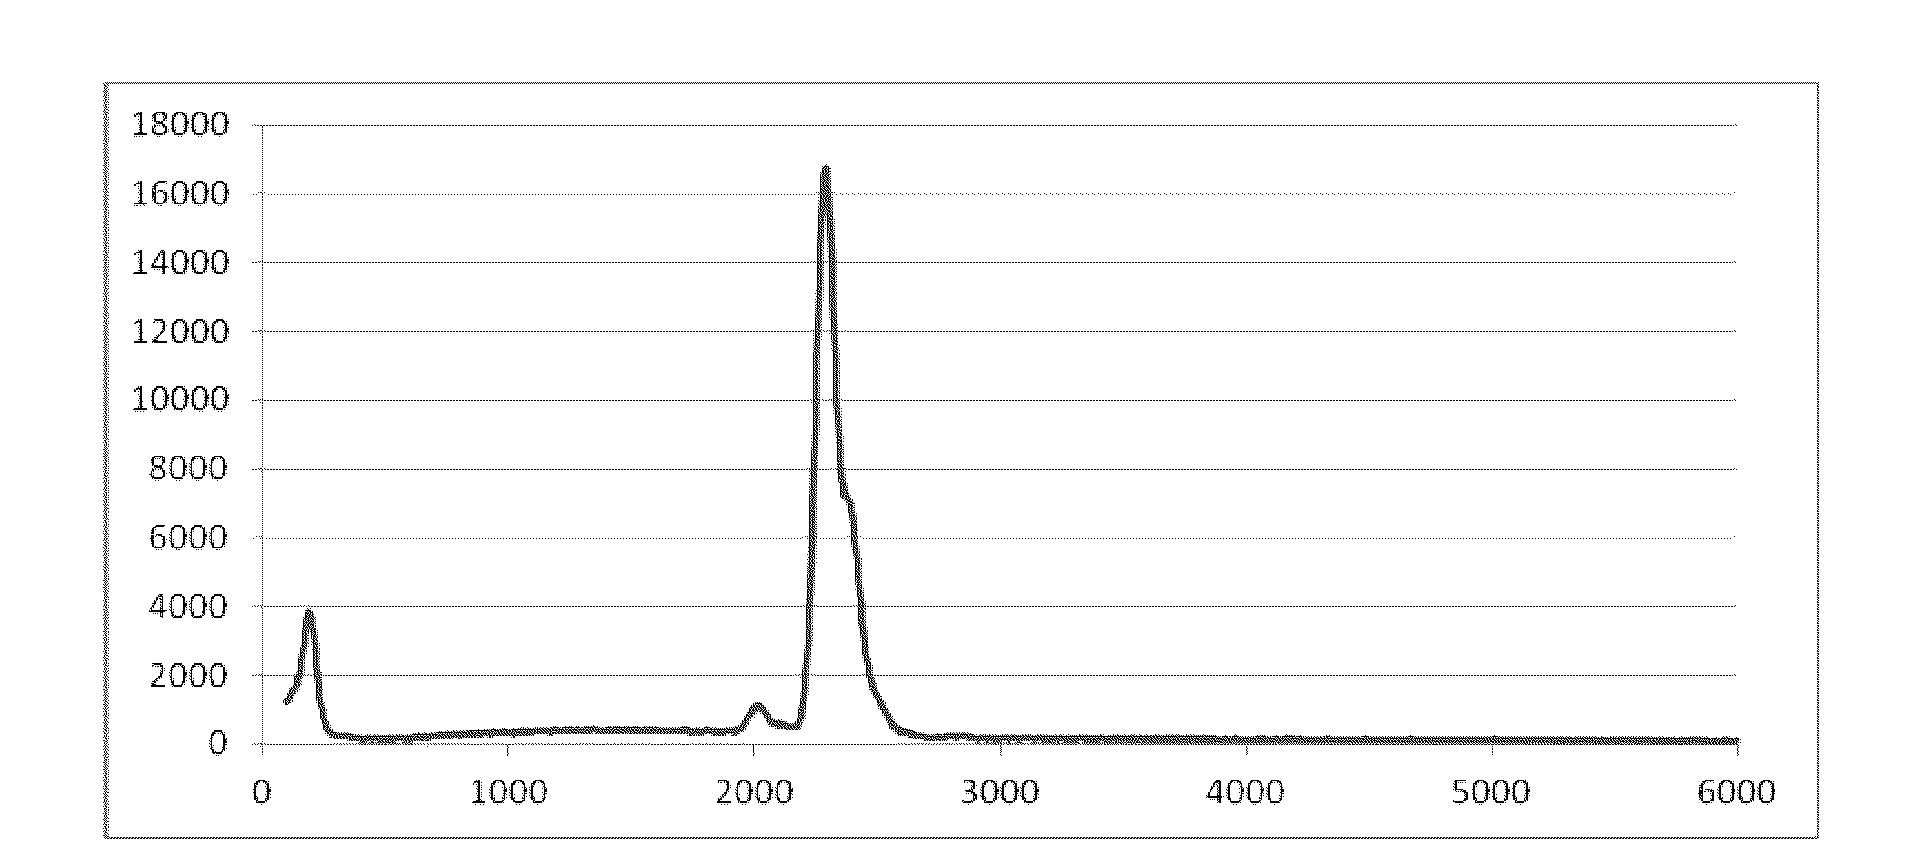 Spectroscopy technique using merged spectral data